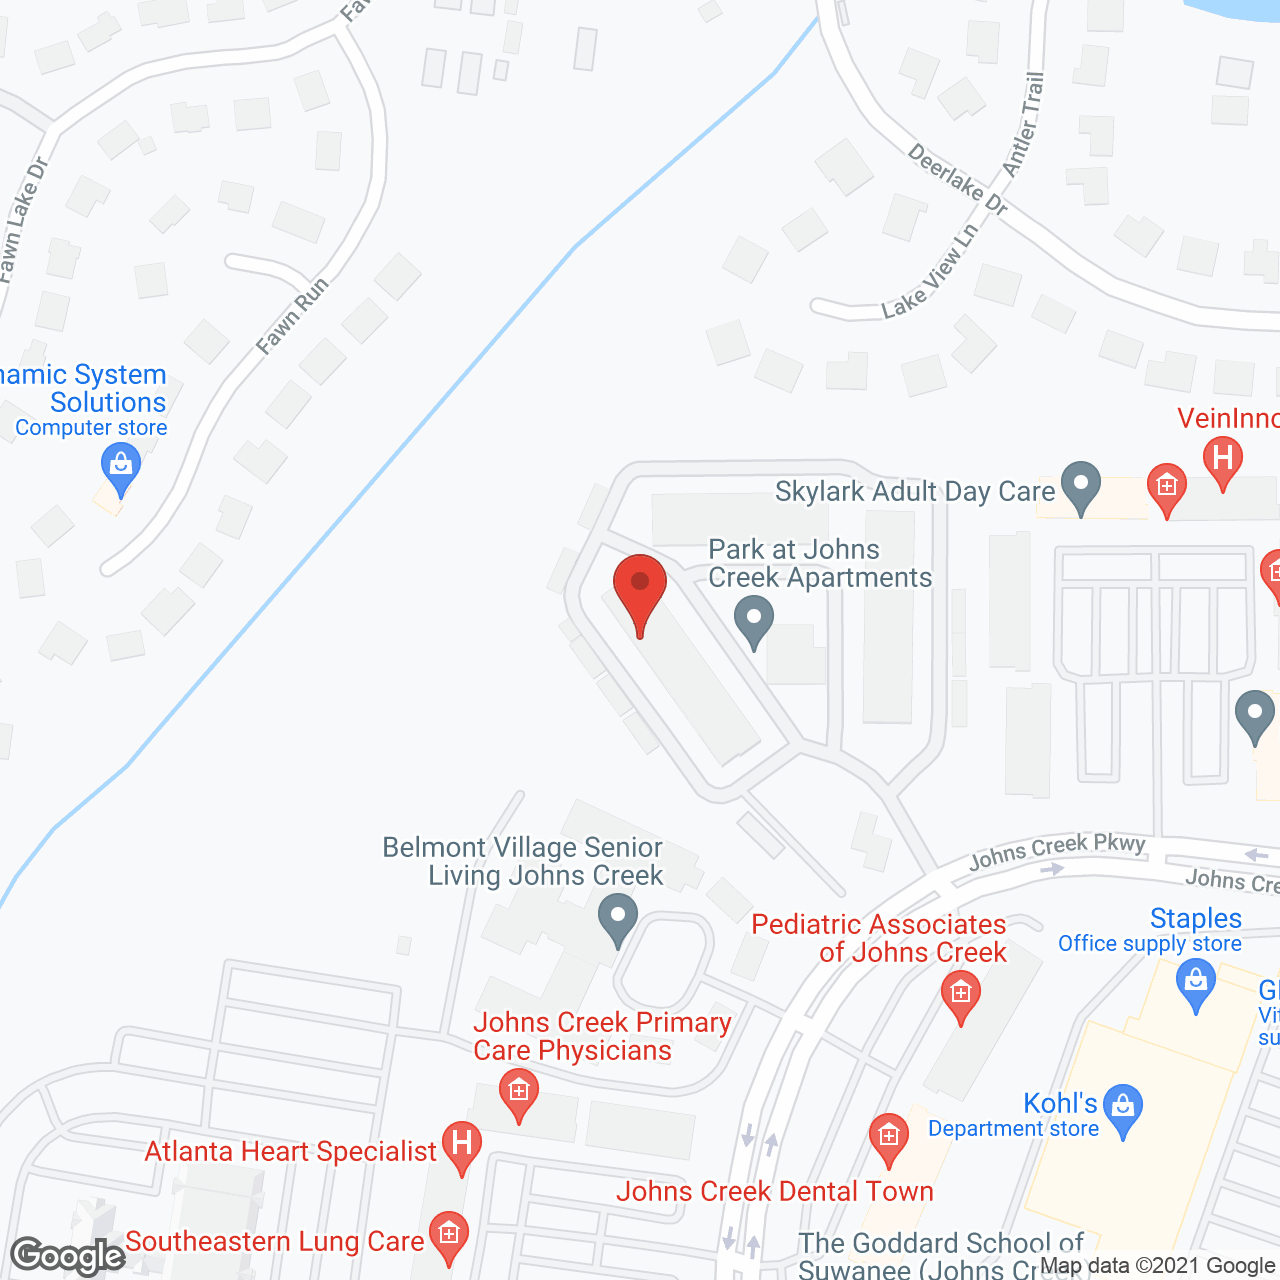 Park at Johns Creek in google map